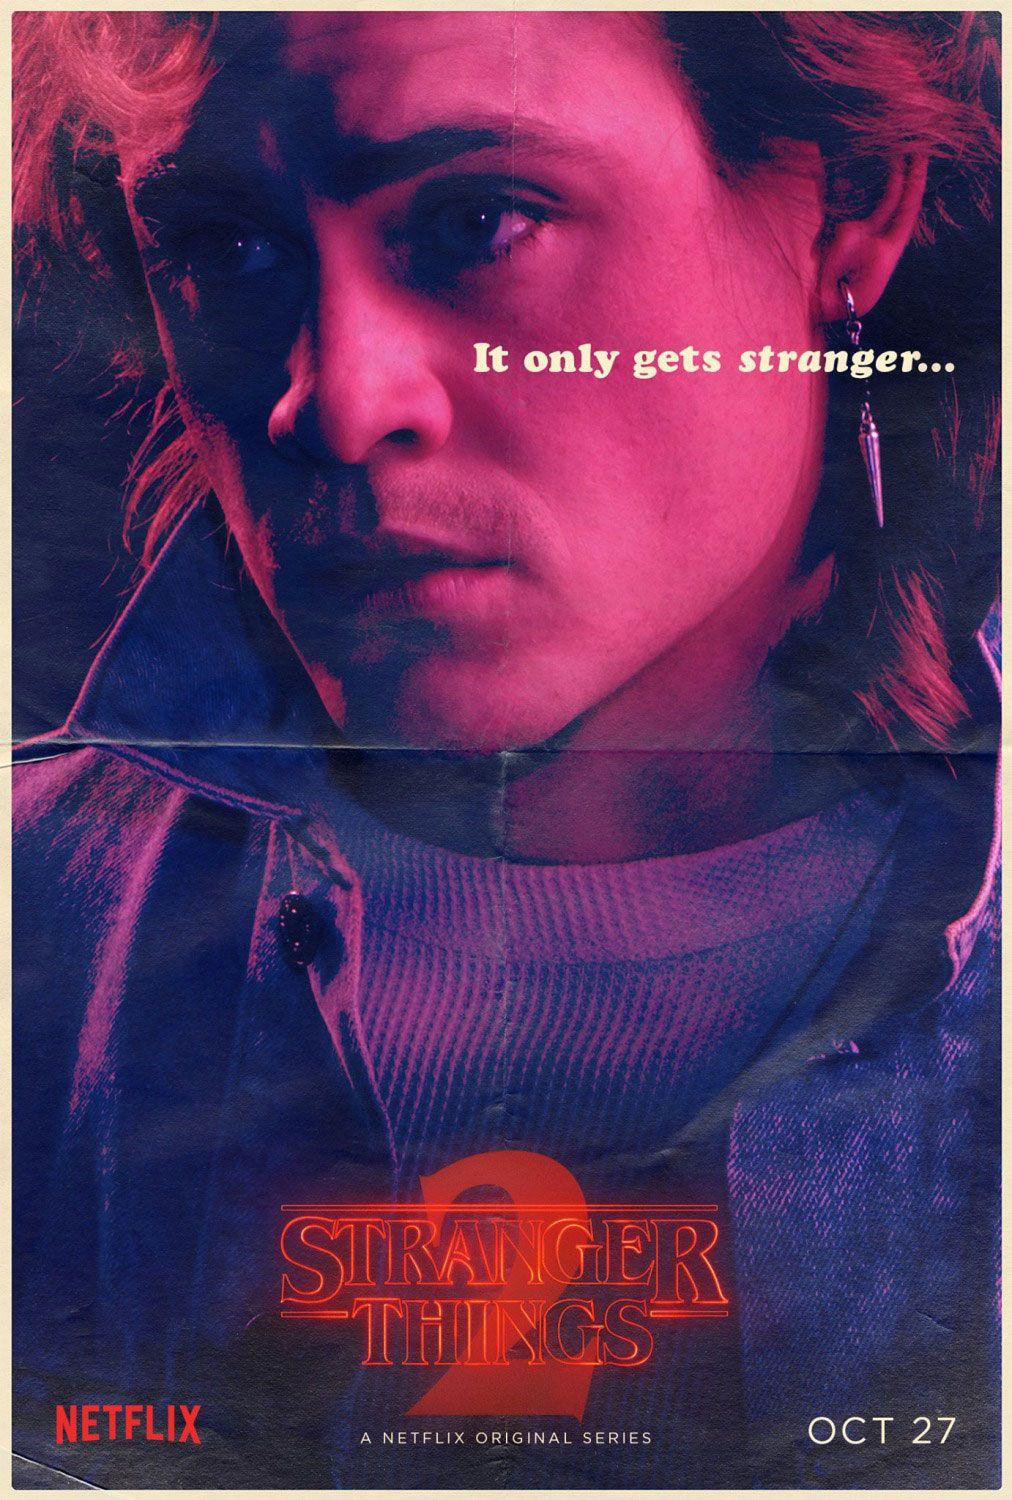 StrangerThings Character poster of Billy